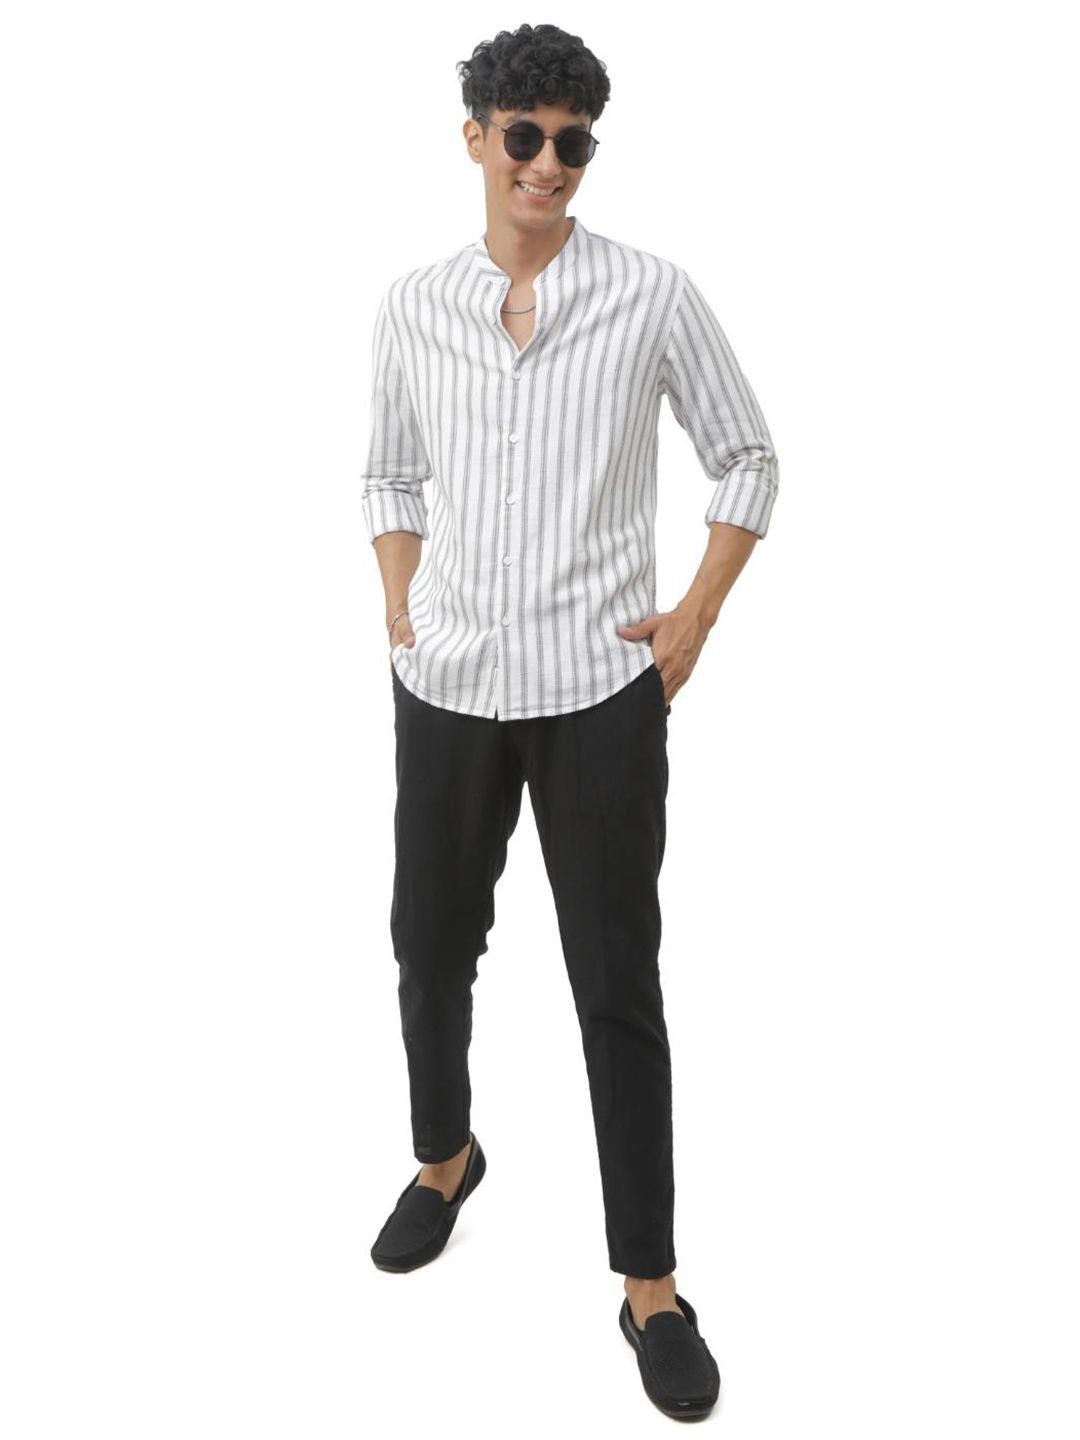 fly 69 premium slim fit vertical striped mandarin collar pure cotton casual shirt